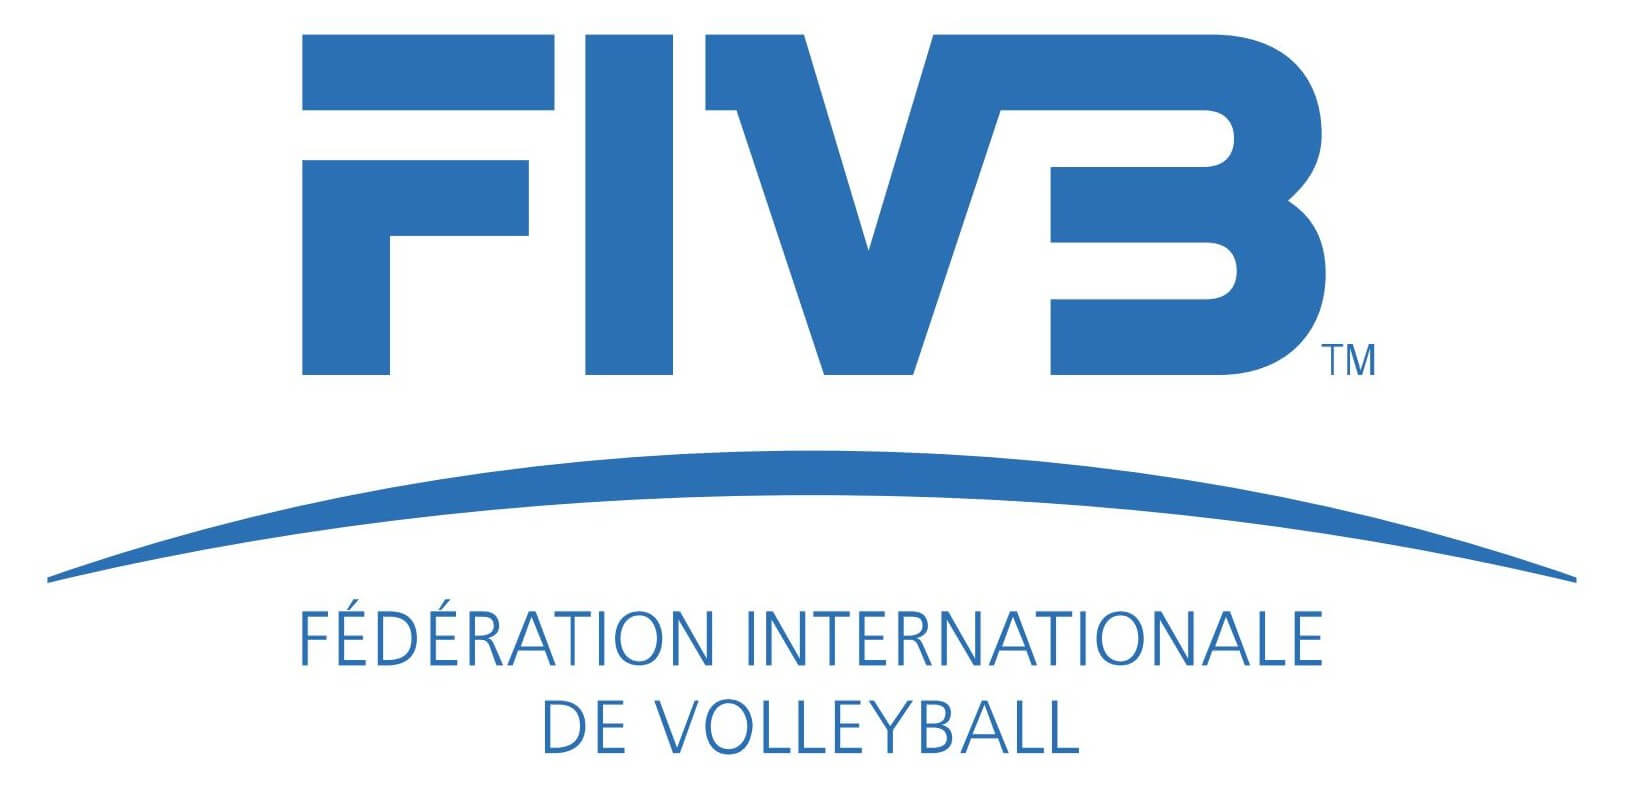 Federation Internationale de Volleyball FIVB logo